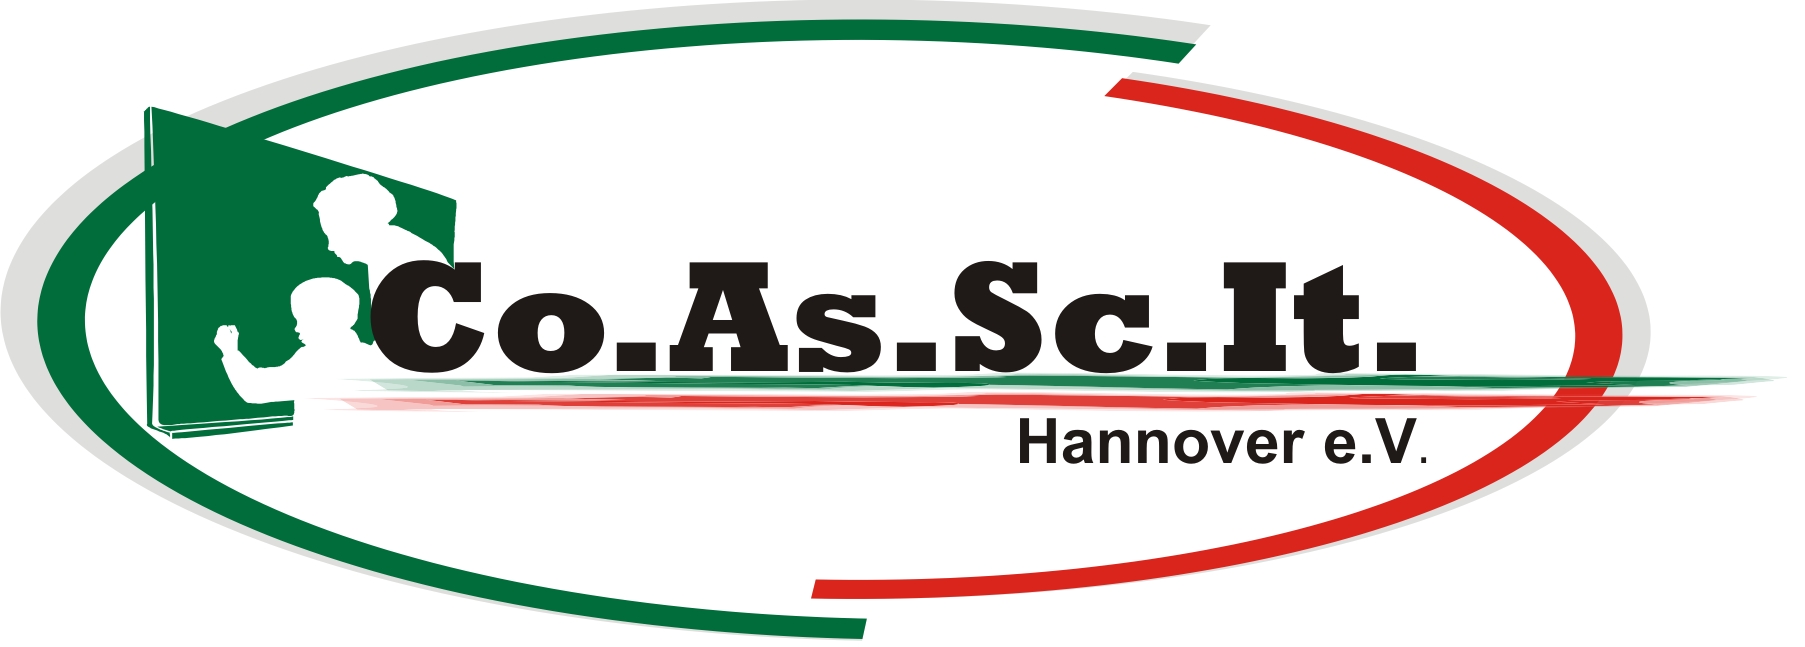 Co.As.Sc.It. Hannover e.V. logo